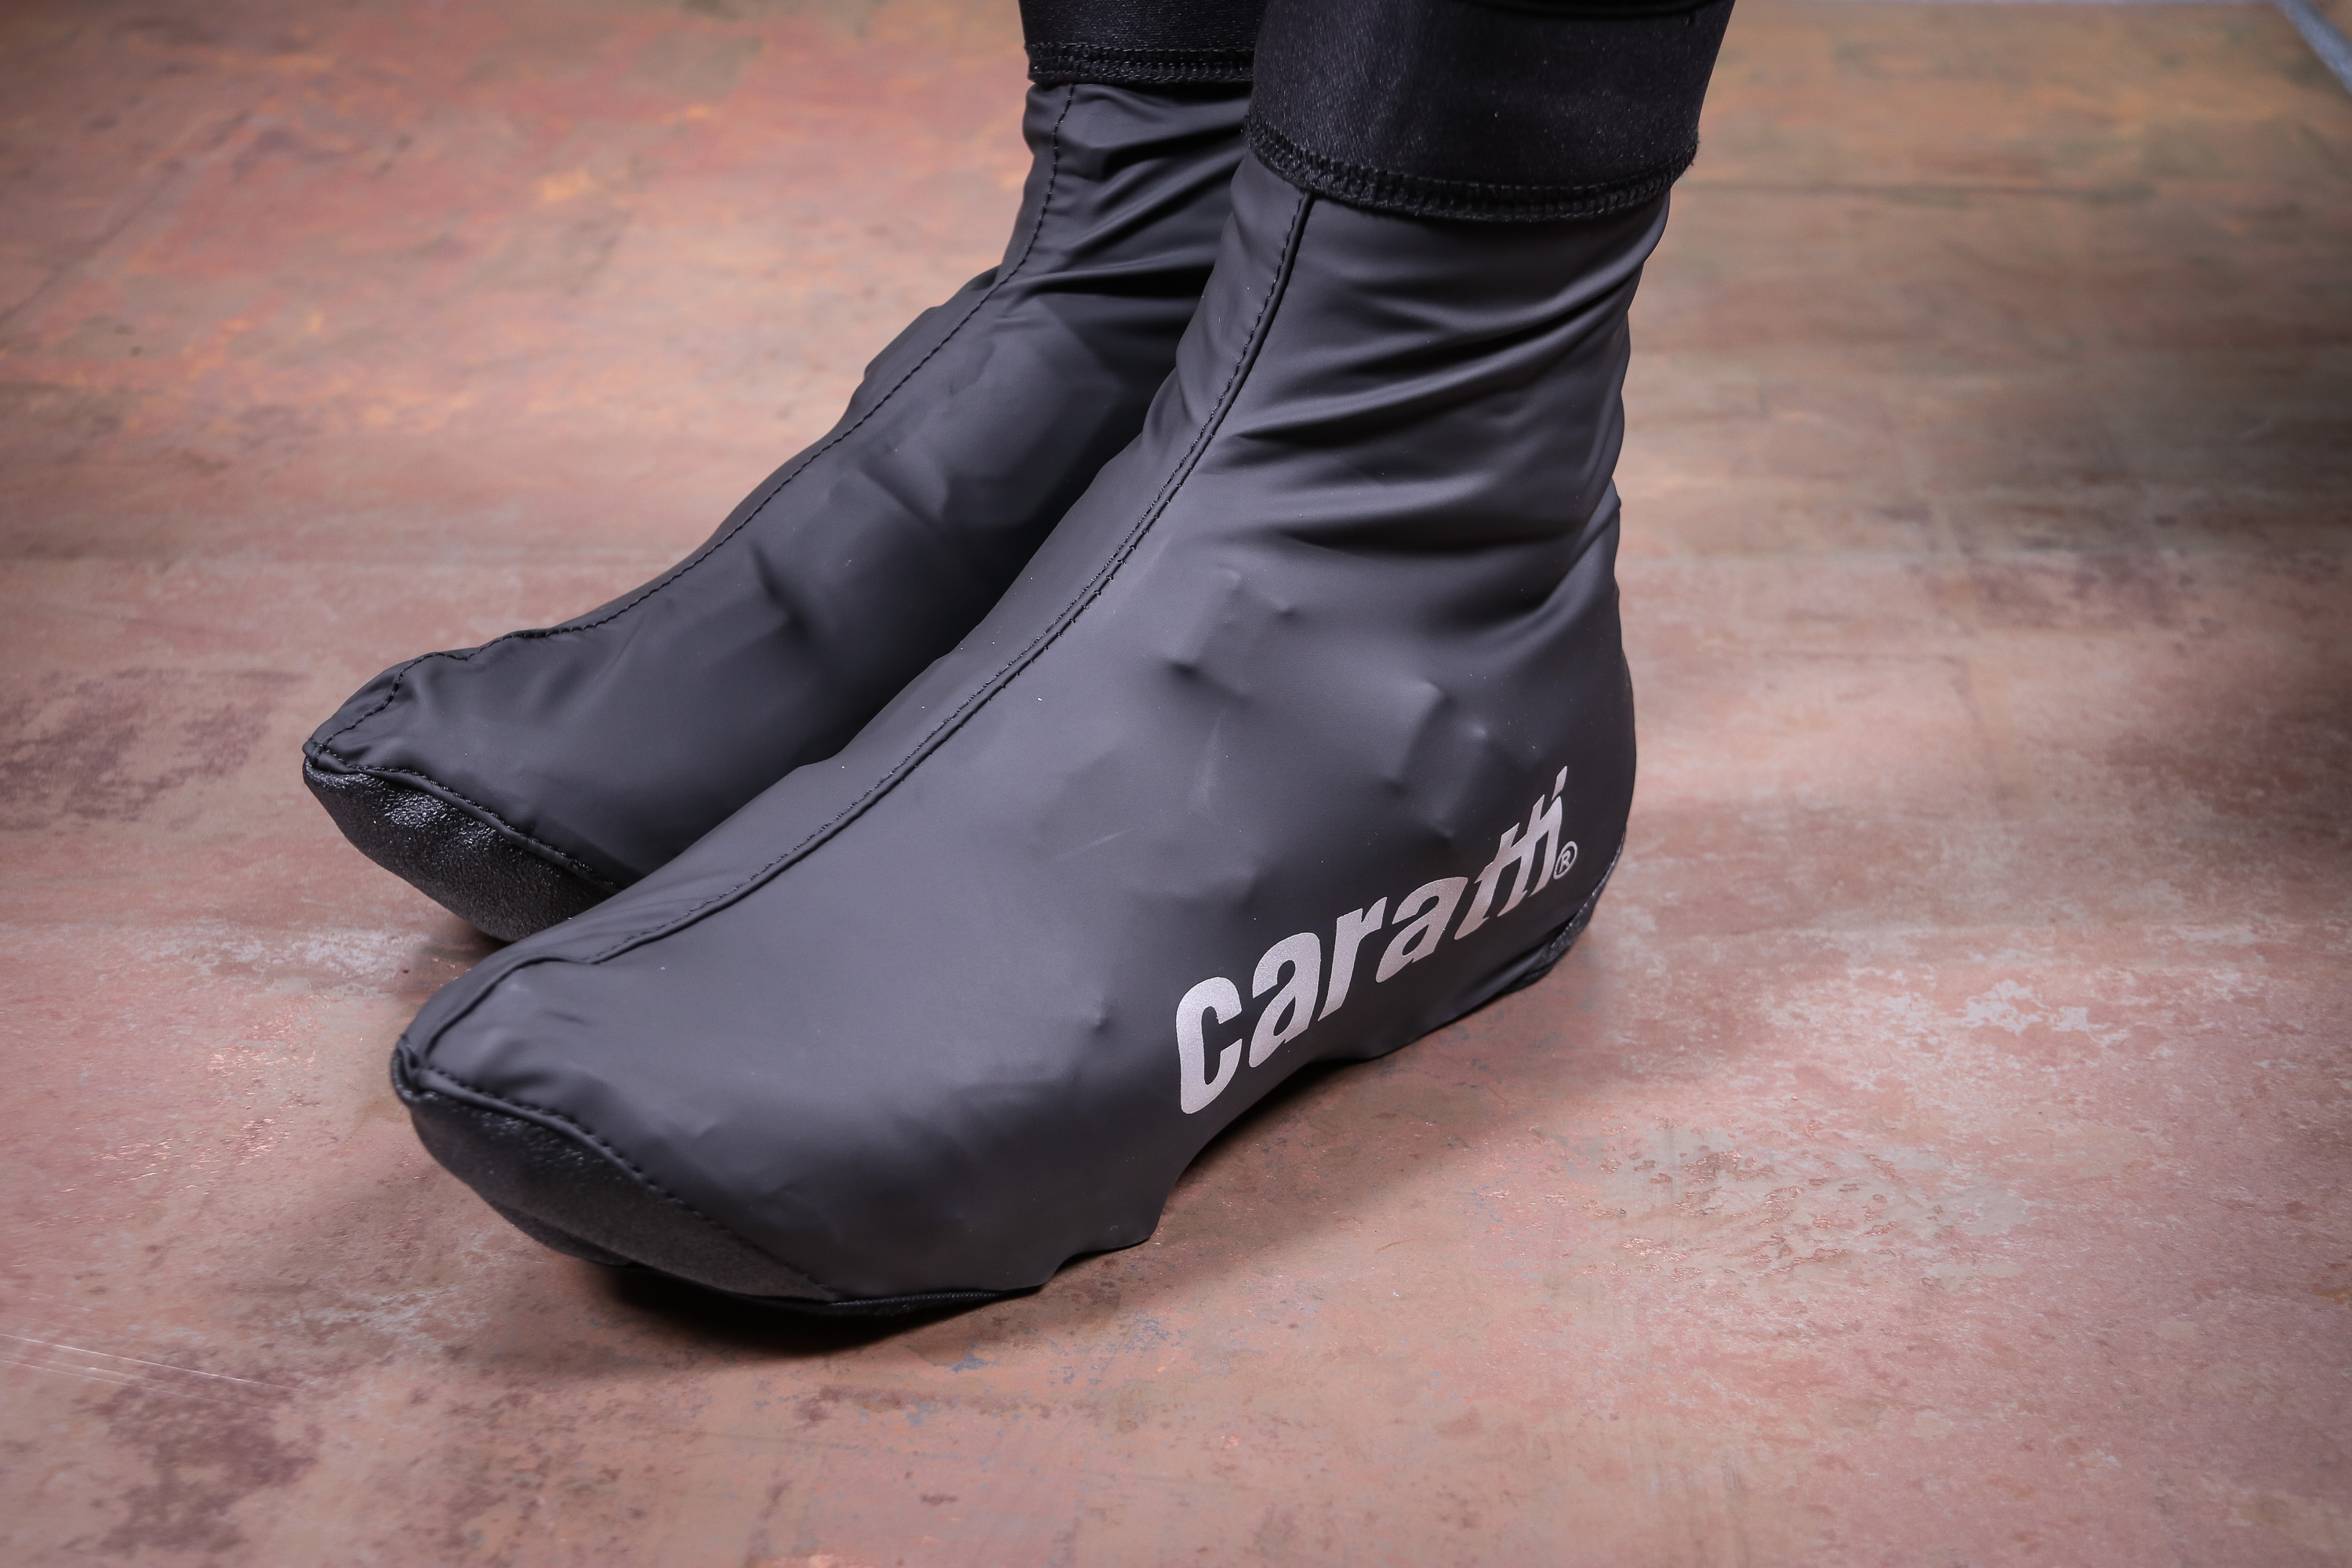 Review: Caratti Lightweight Waterproof 